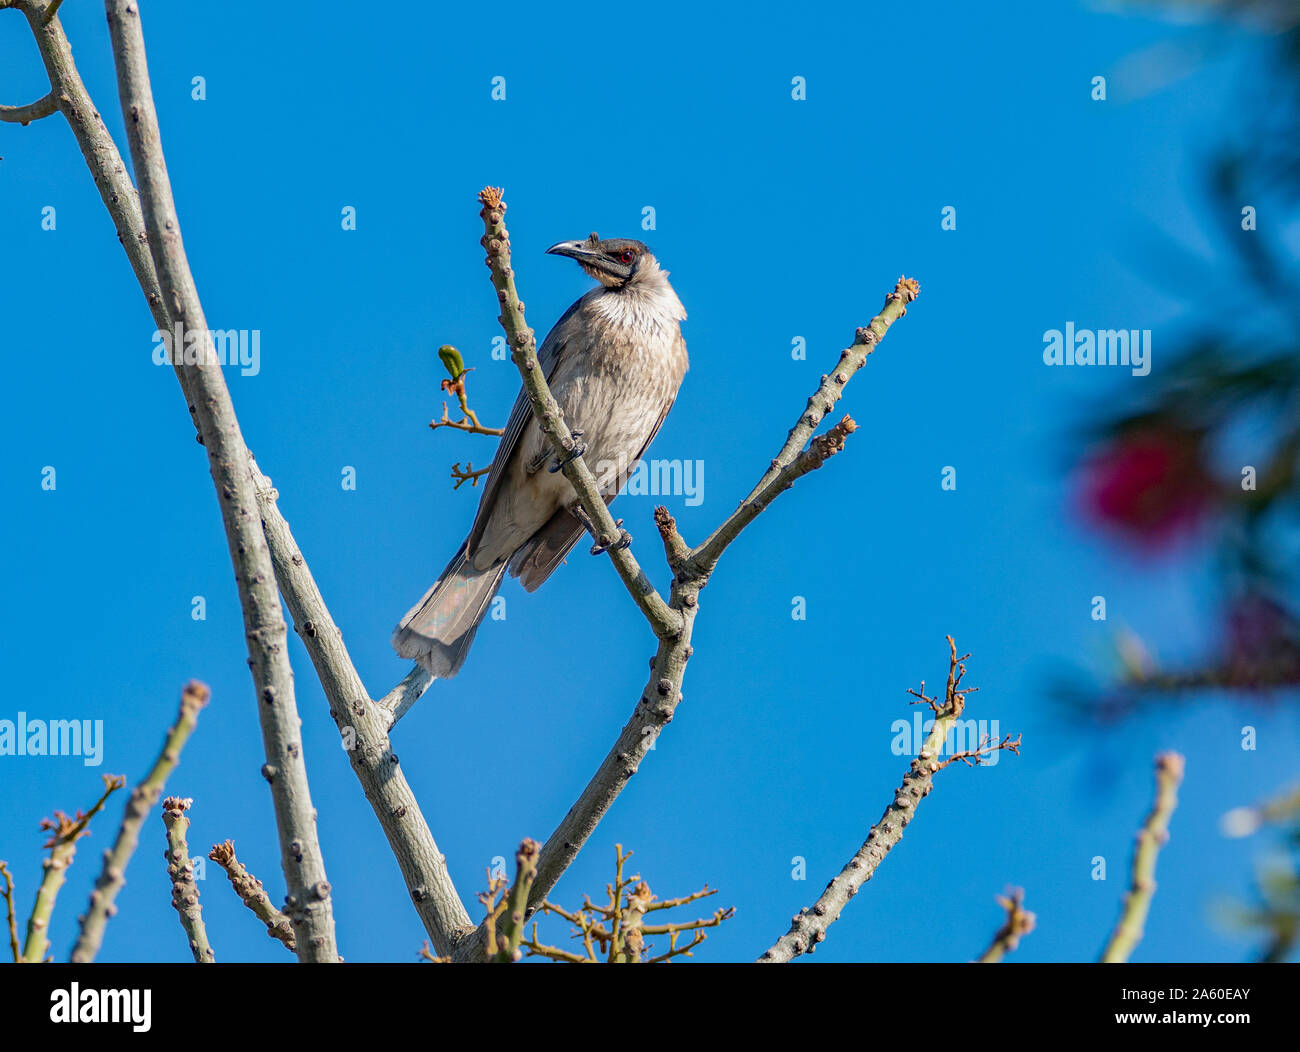 Un fraile ruidoso pájaro posado en las ramas de un árbol contra un cielo azul claro Foto de stock